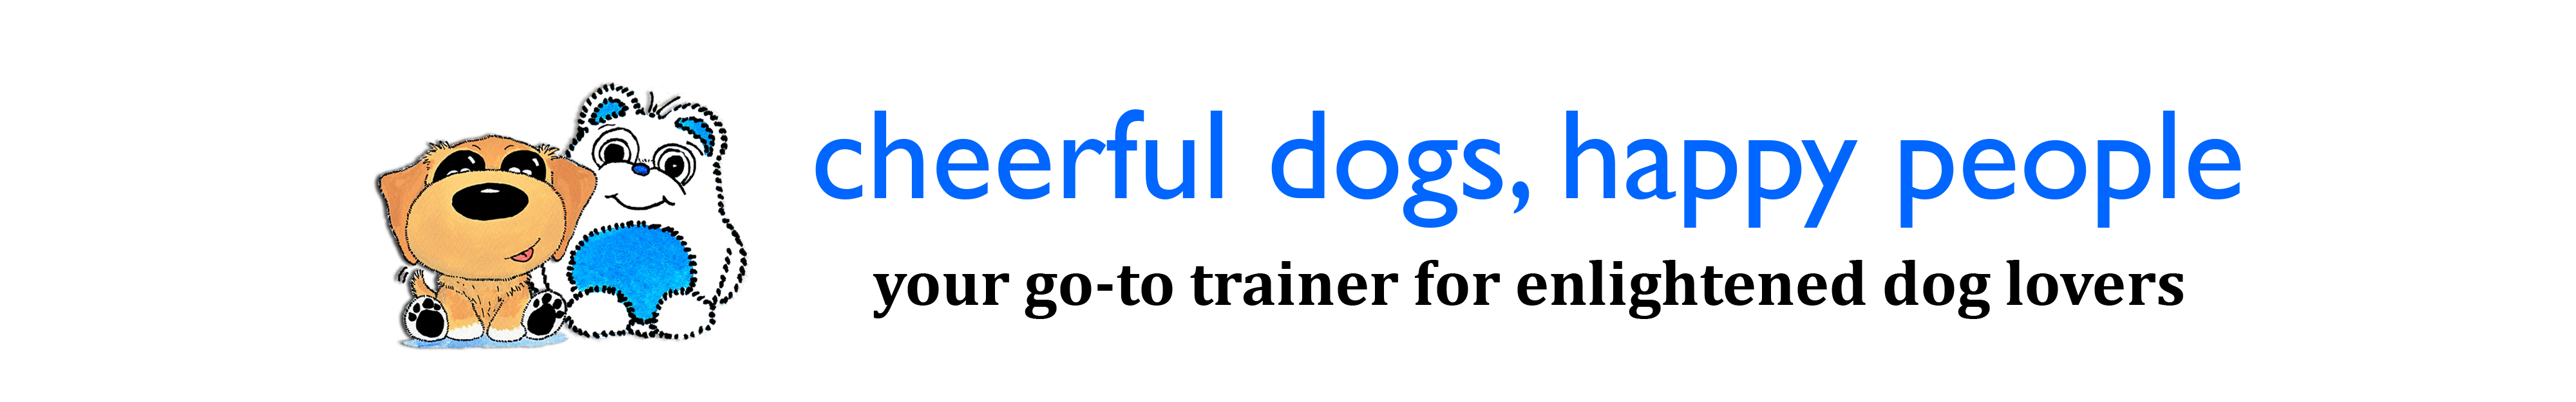 cheerfuldogs.com Dog Training SG